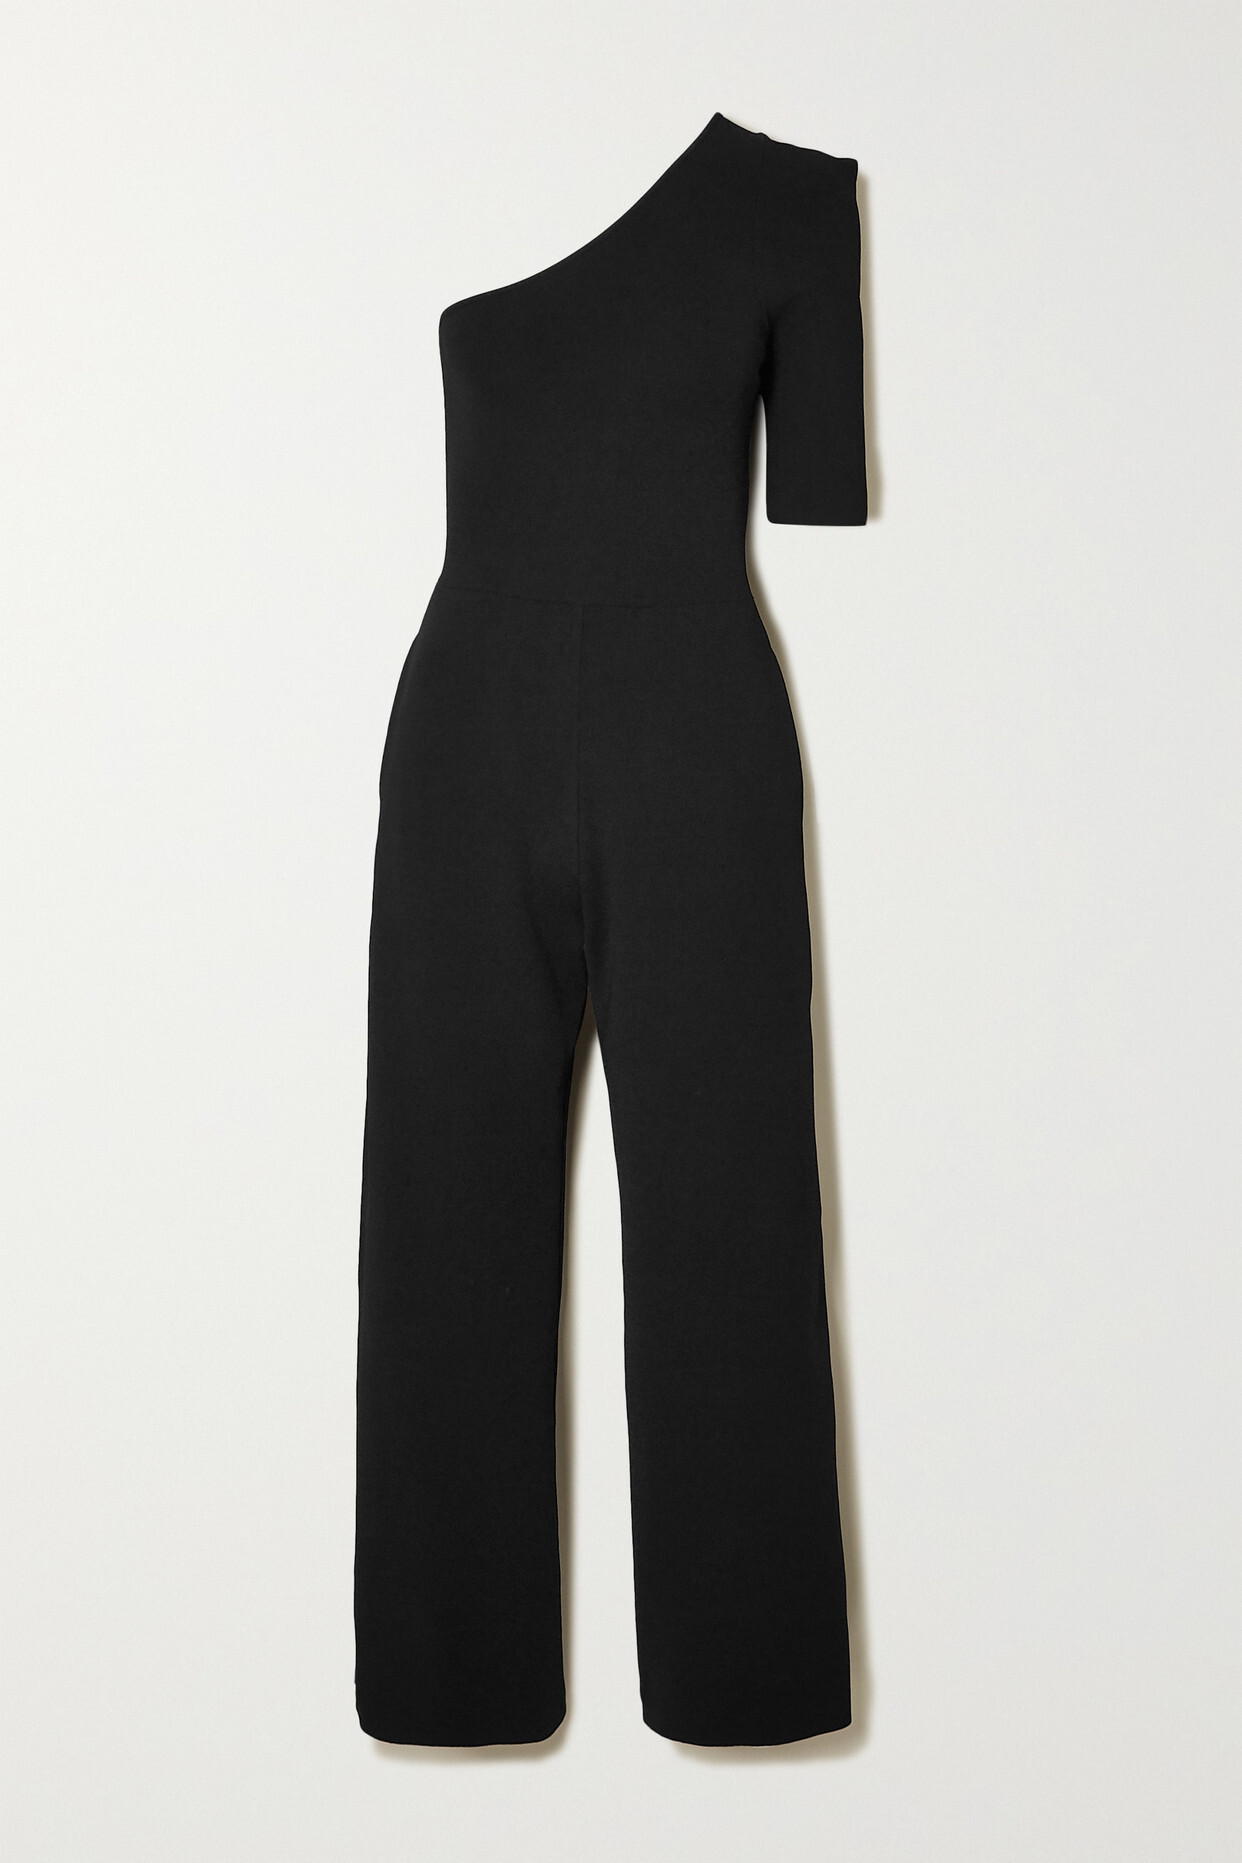 Stella McCartney - + Net Sustain One-sleeve Stretch-knit Jumpsuit - Black